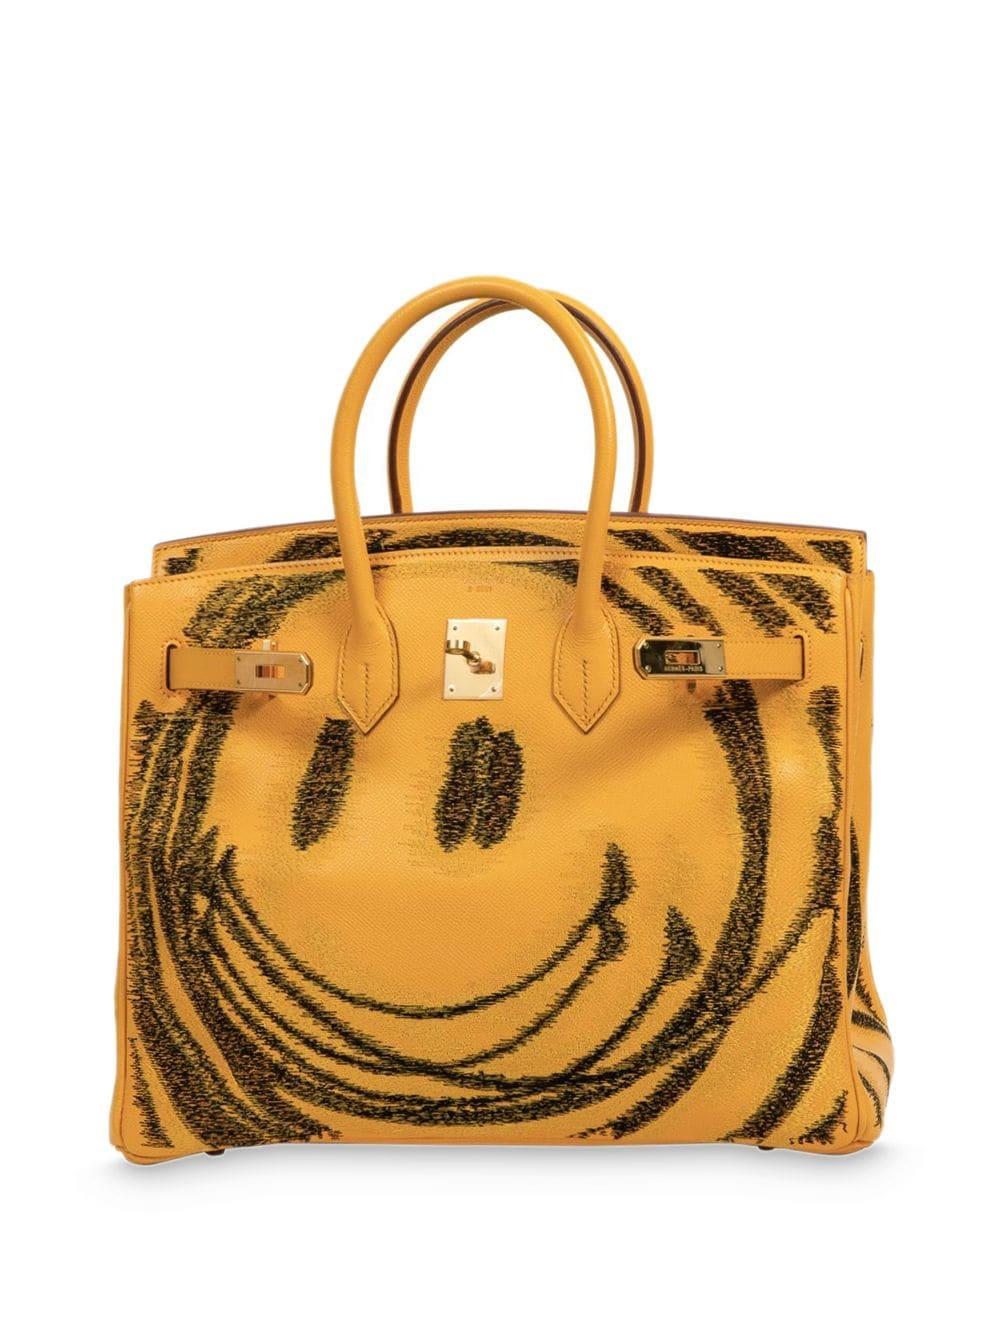 Jay Ahr Hermès Birkin 35 Smiley Tote Bag in Yellow | Lyst